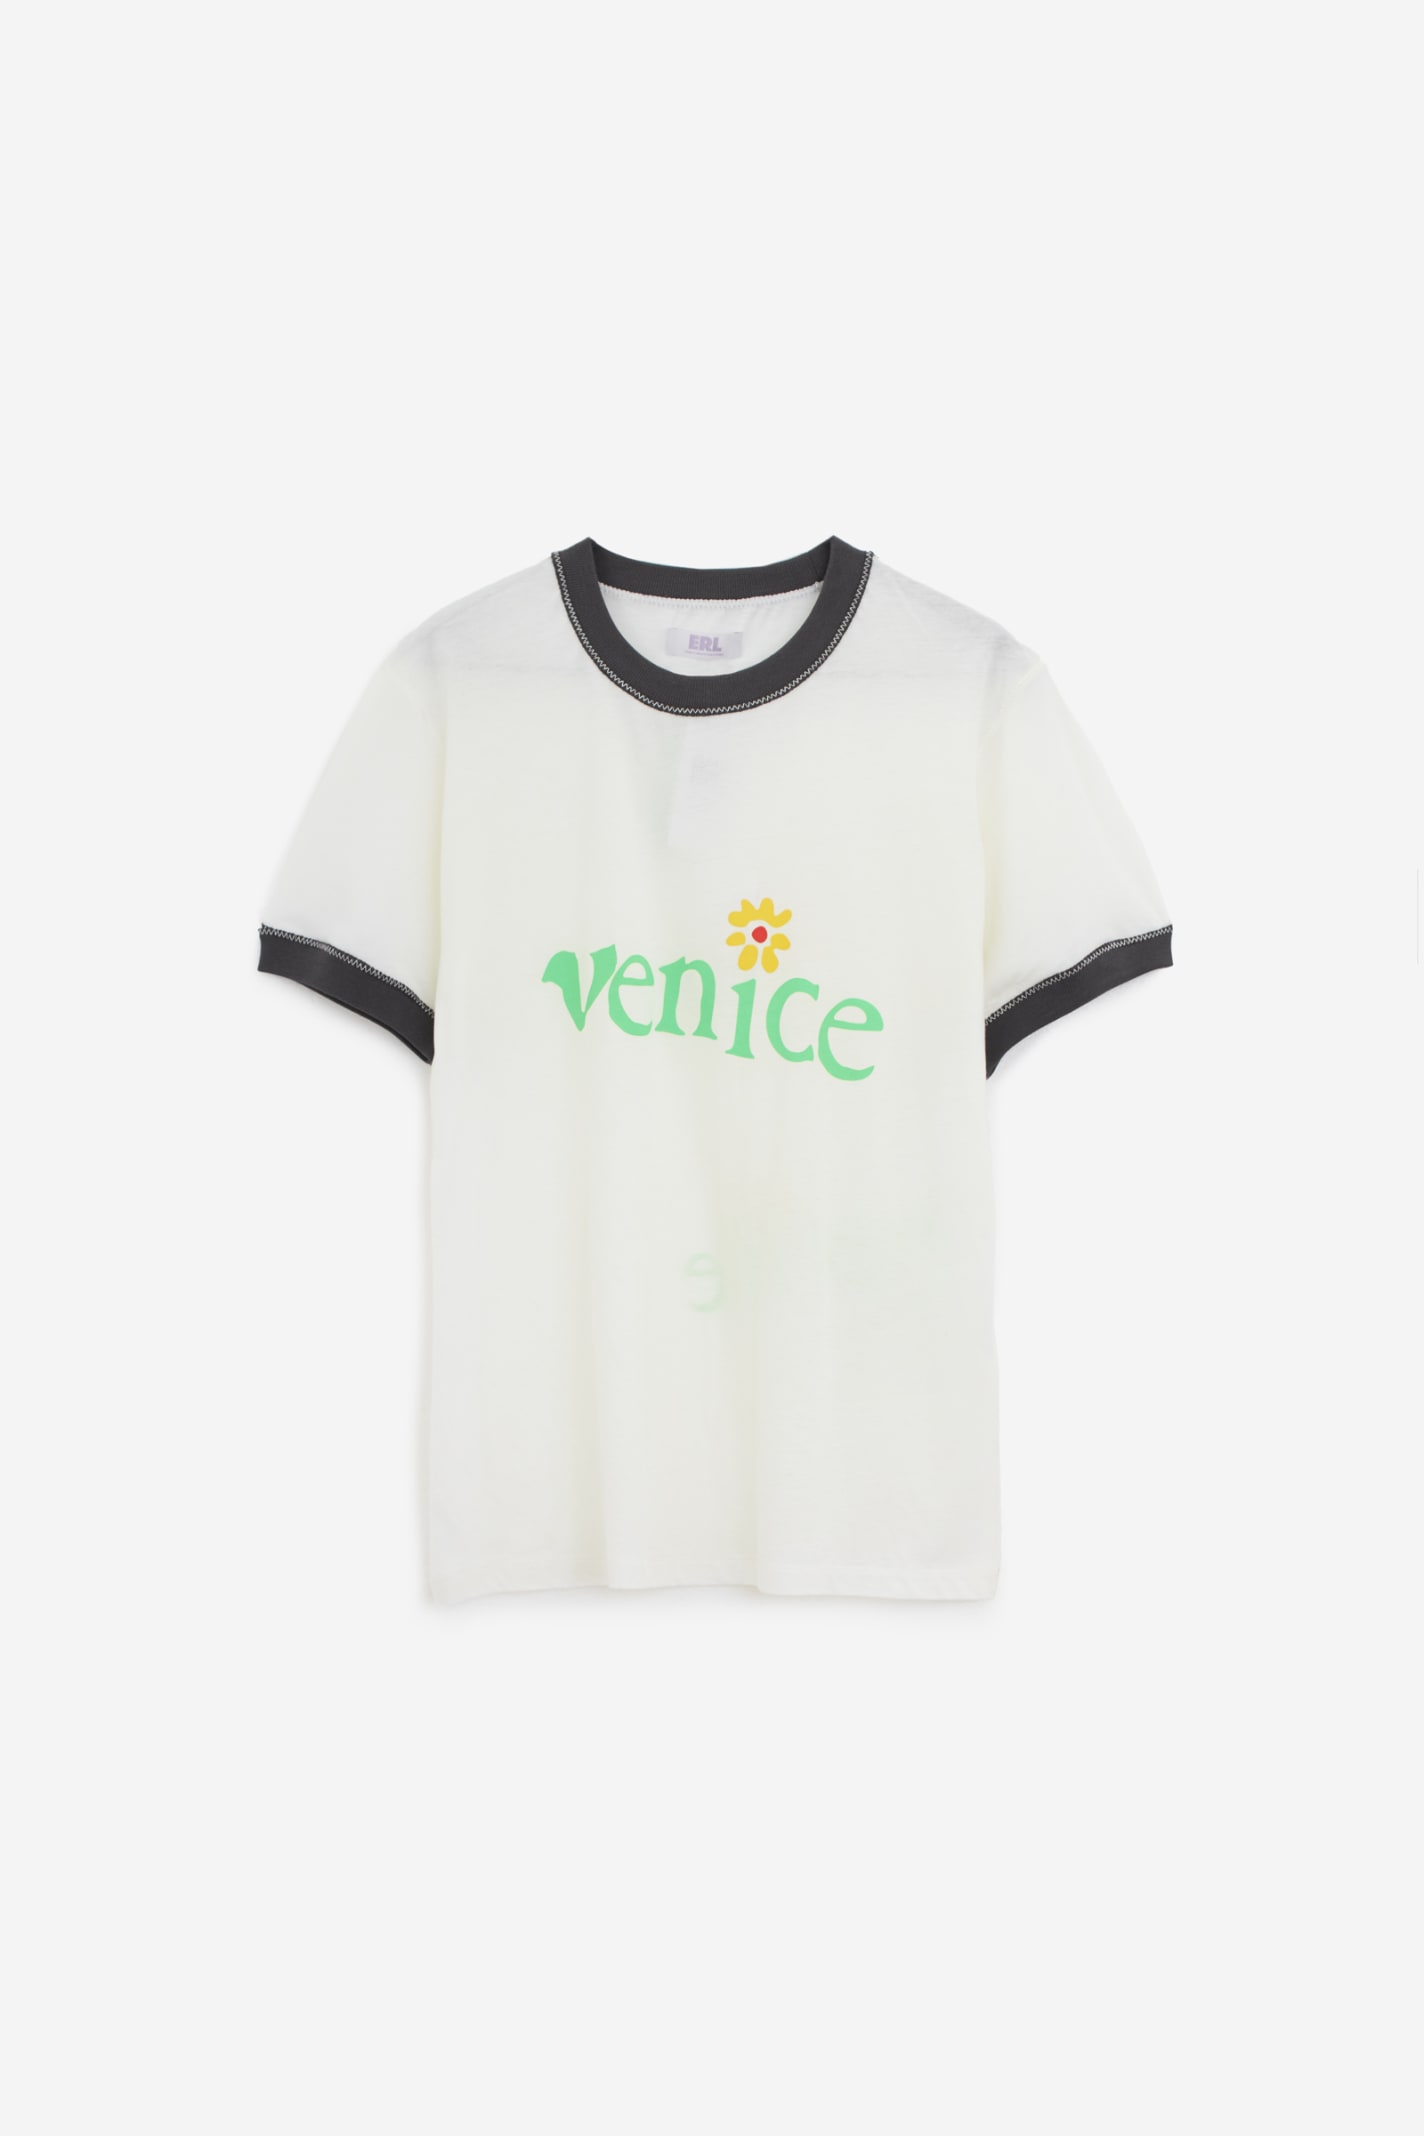 Venice Tshirt T-shirt